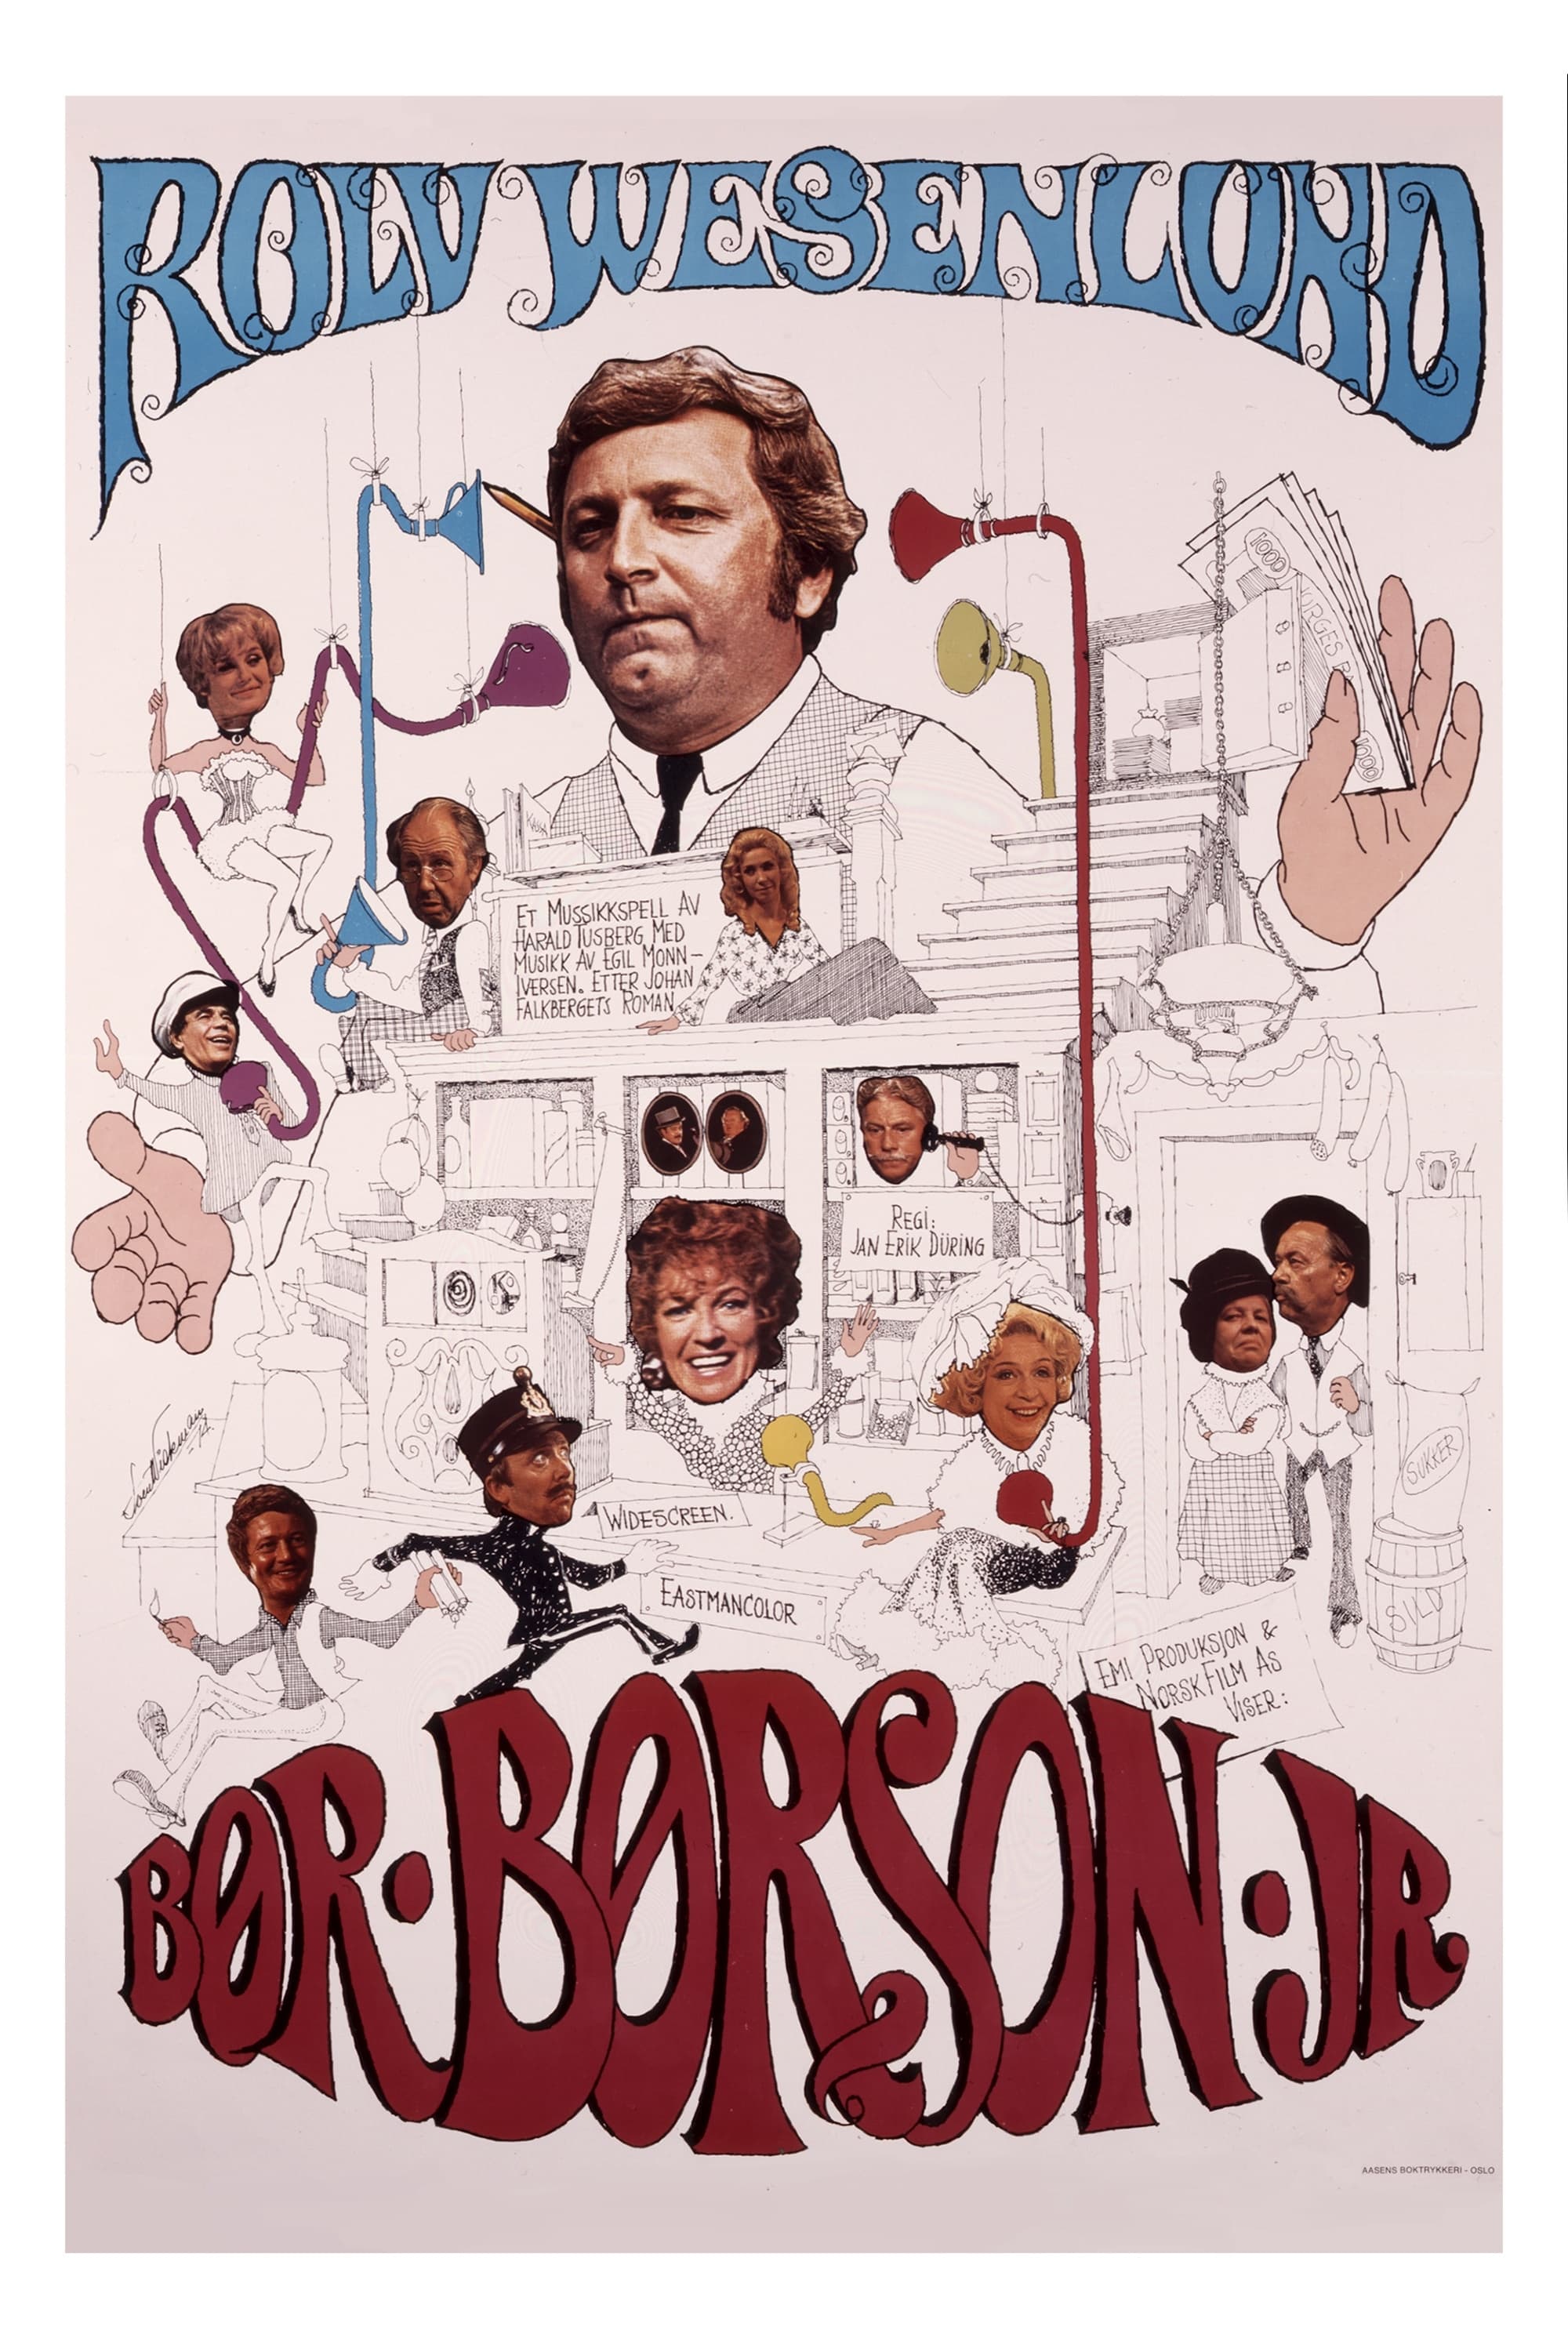 Bør Børson Jr. (1974)